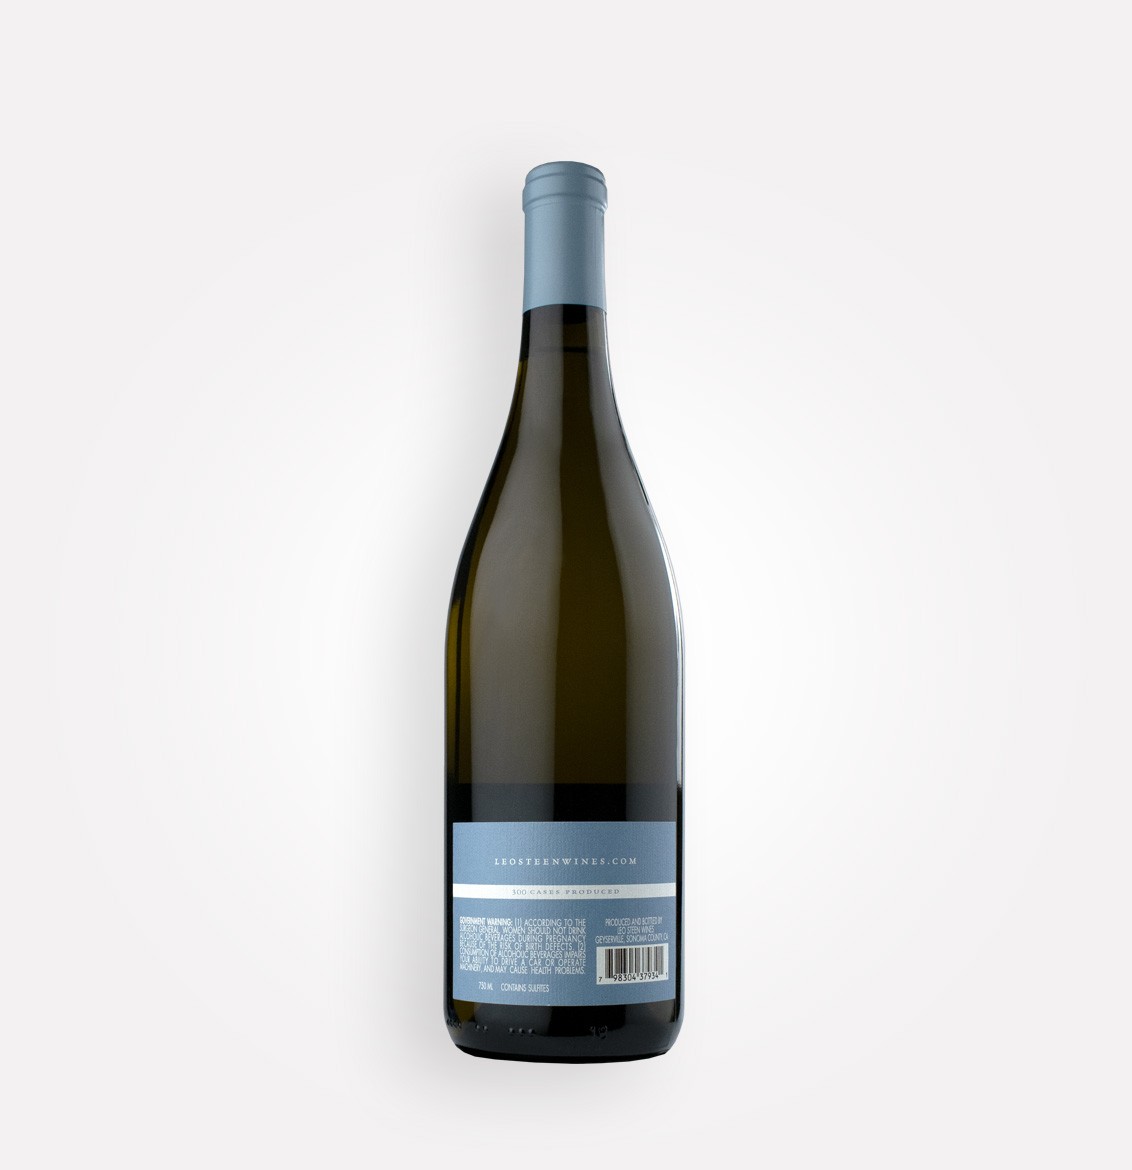 Back bottle view of Leo Steen 2018 Bruzzone Vineyard Chardonnay from California's Santa Cruz Mountains